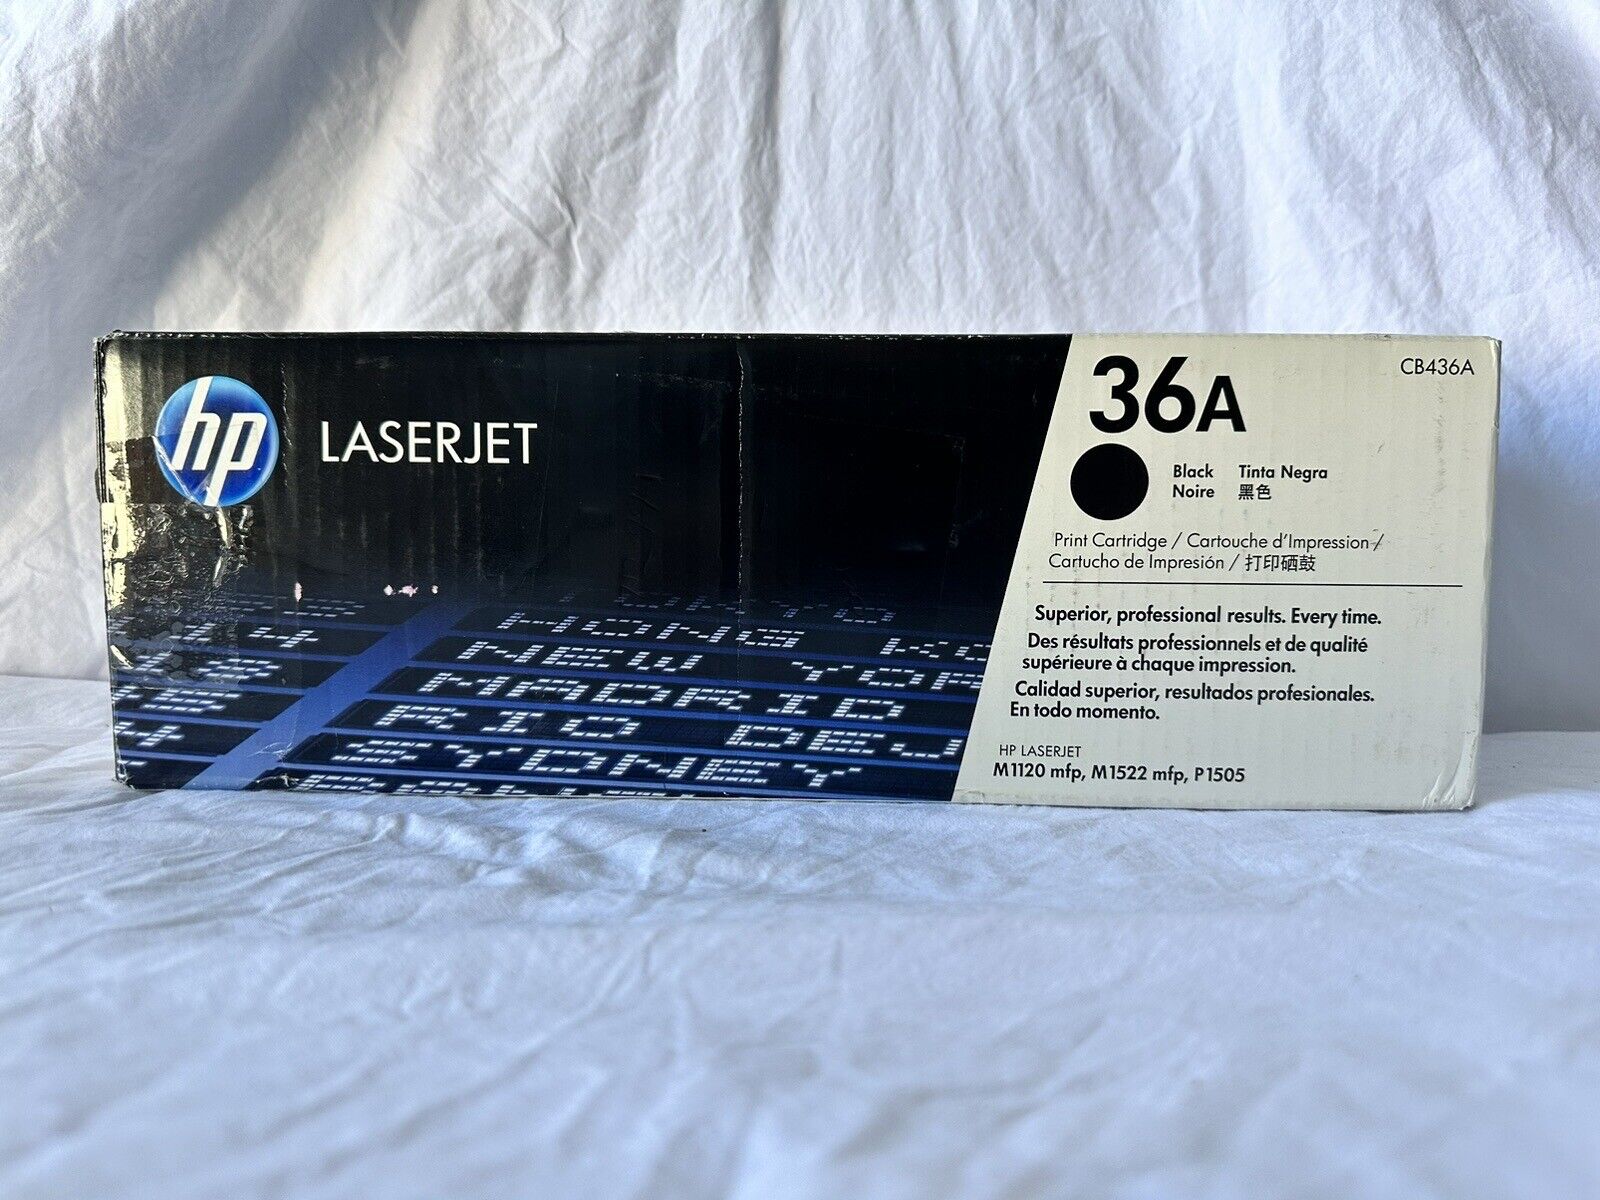 HP 36A LaserJet Toner Cartridge - Black (CB436A) Open Box, Sealed Foil